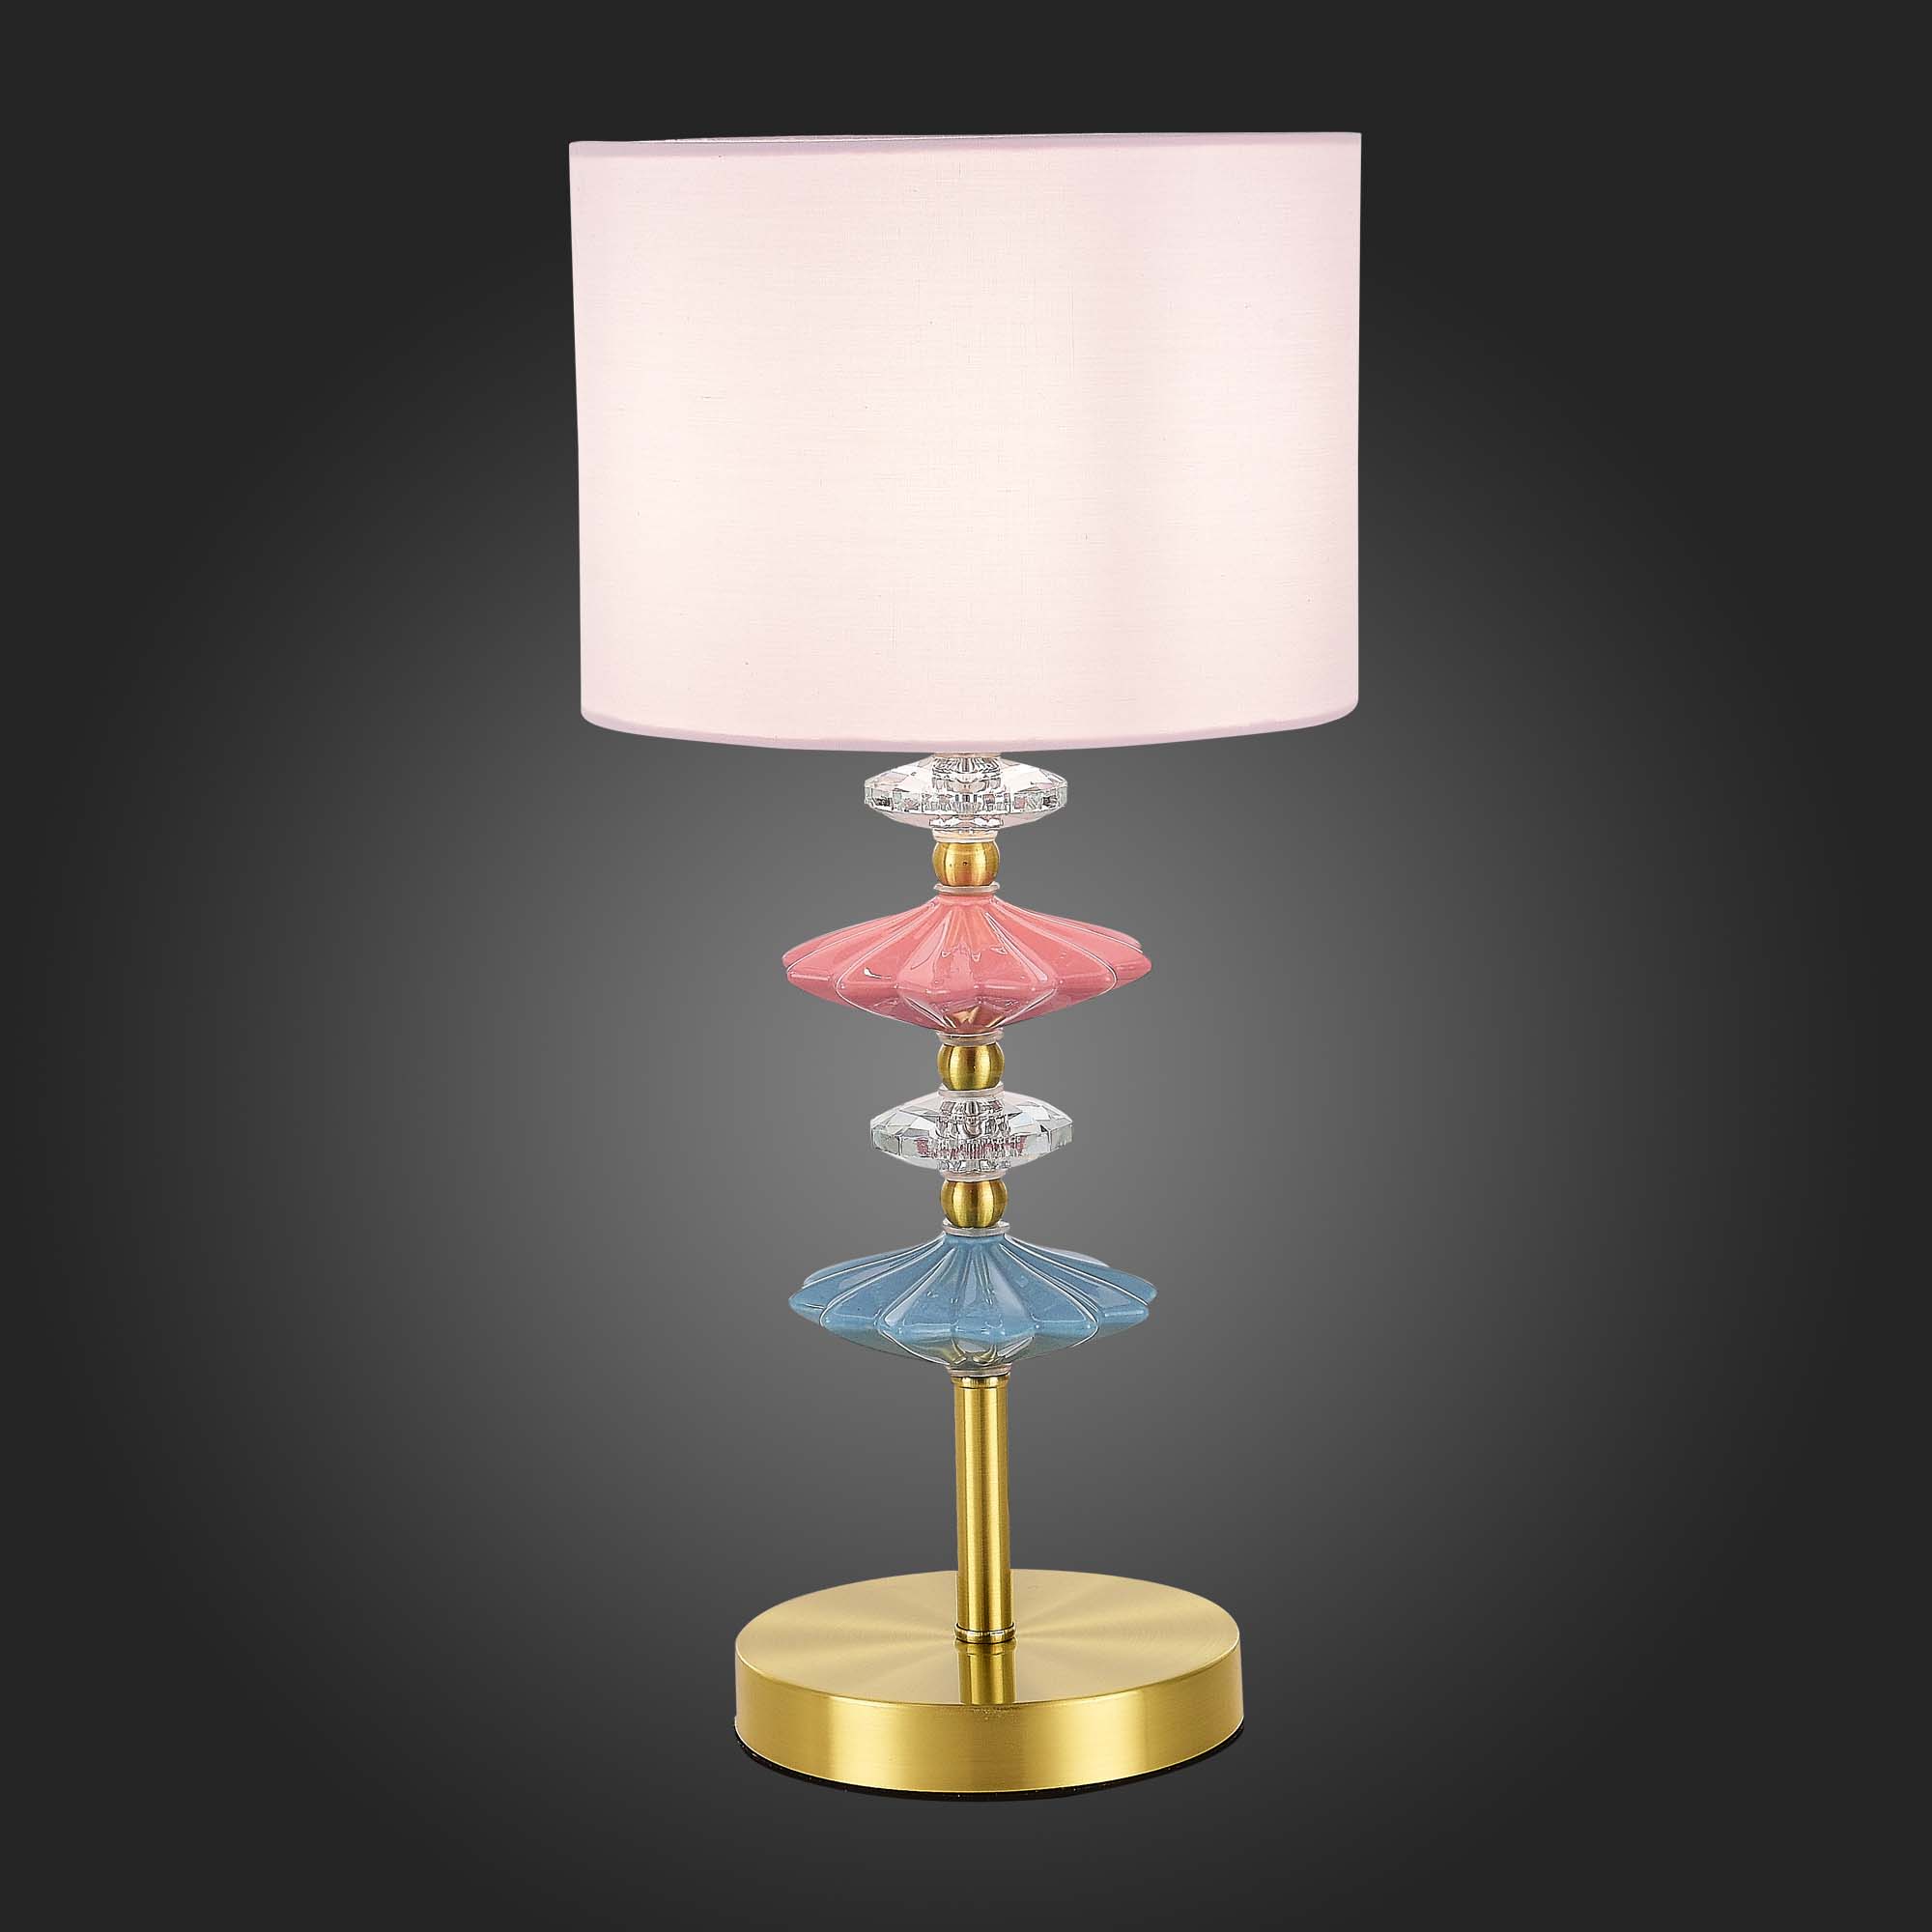 SLE1117-204-01 Прикроватная лампа Золотистый/Розовый E14 1*40W ATTIC